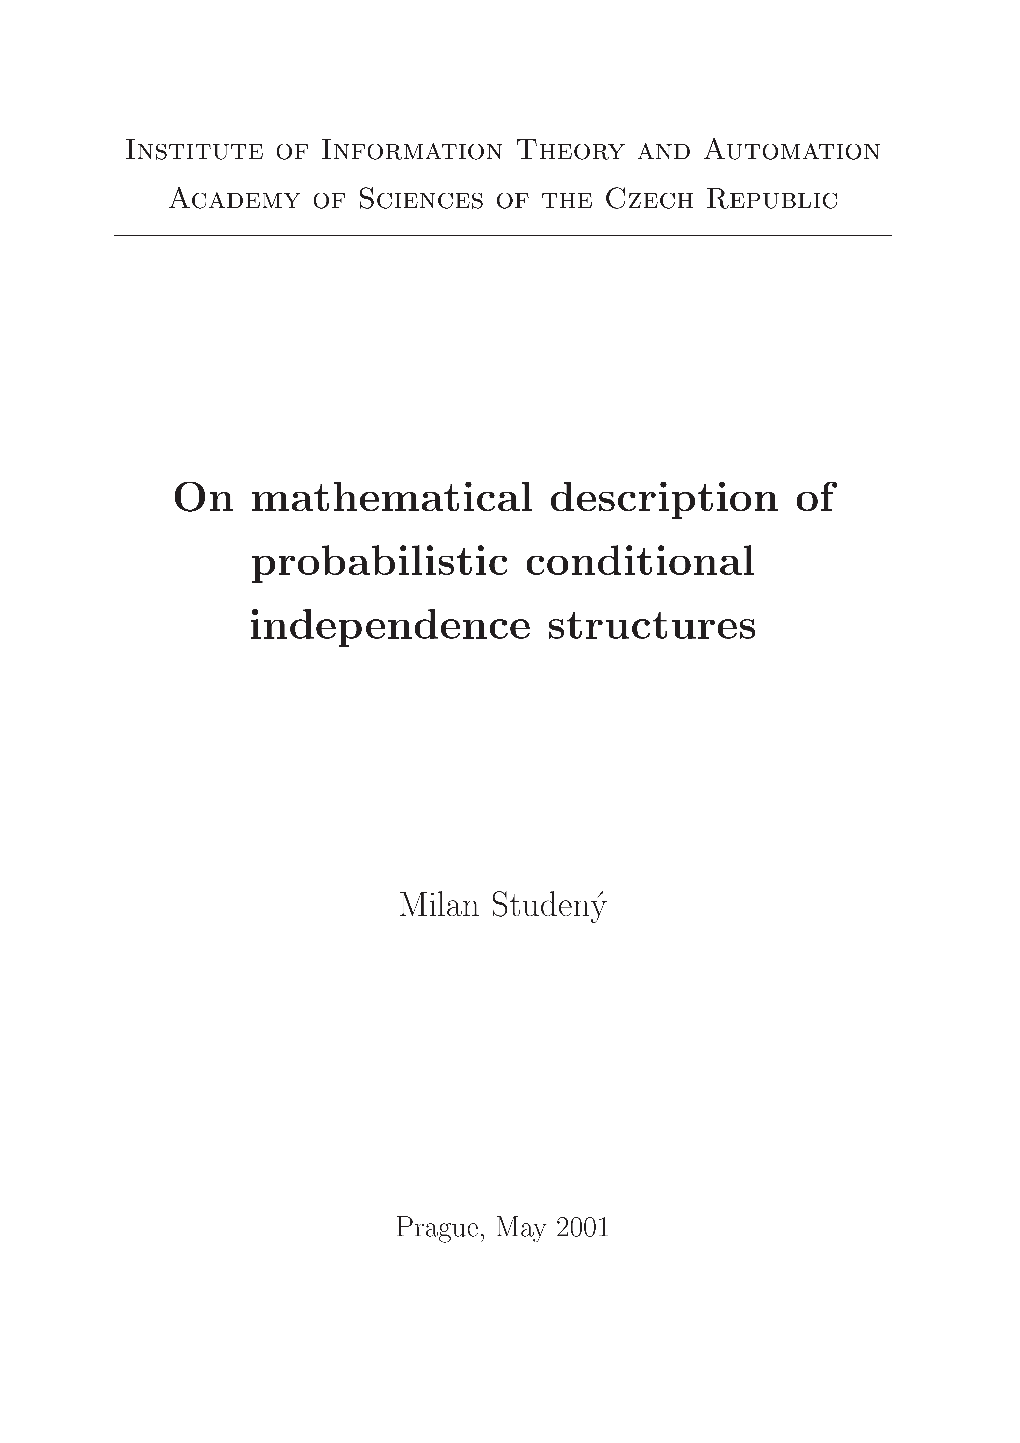 On Mathematical Description of Probabilistic Conditional